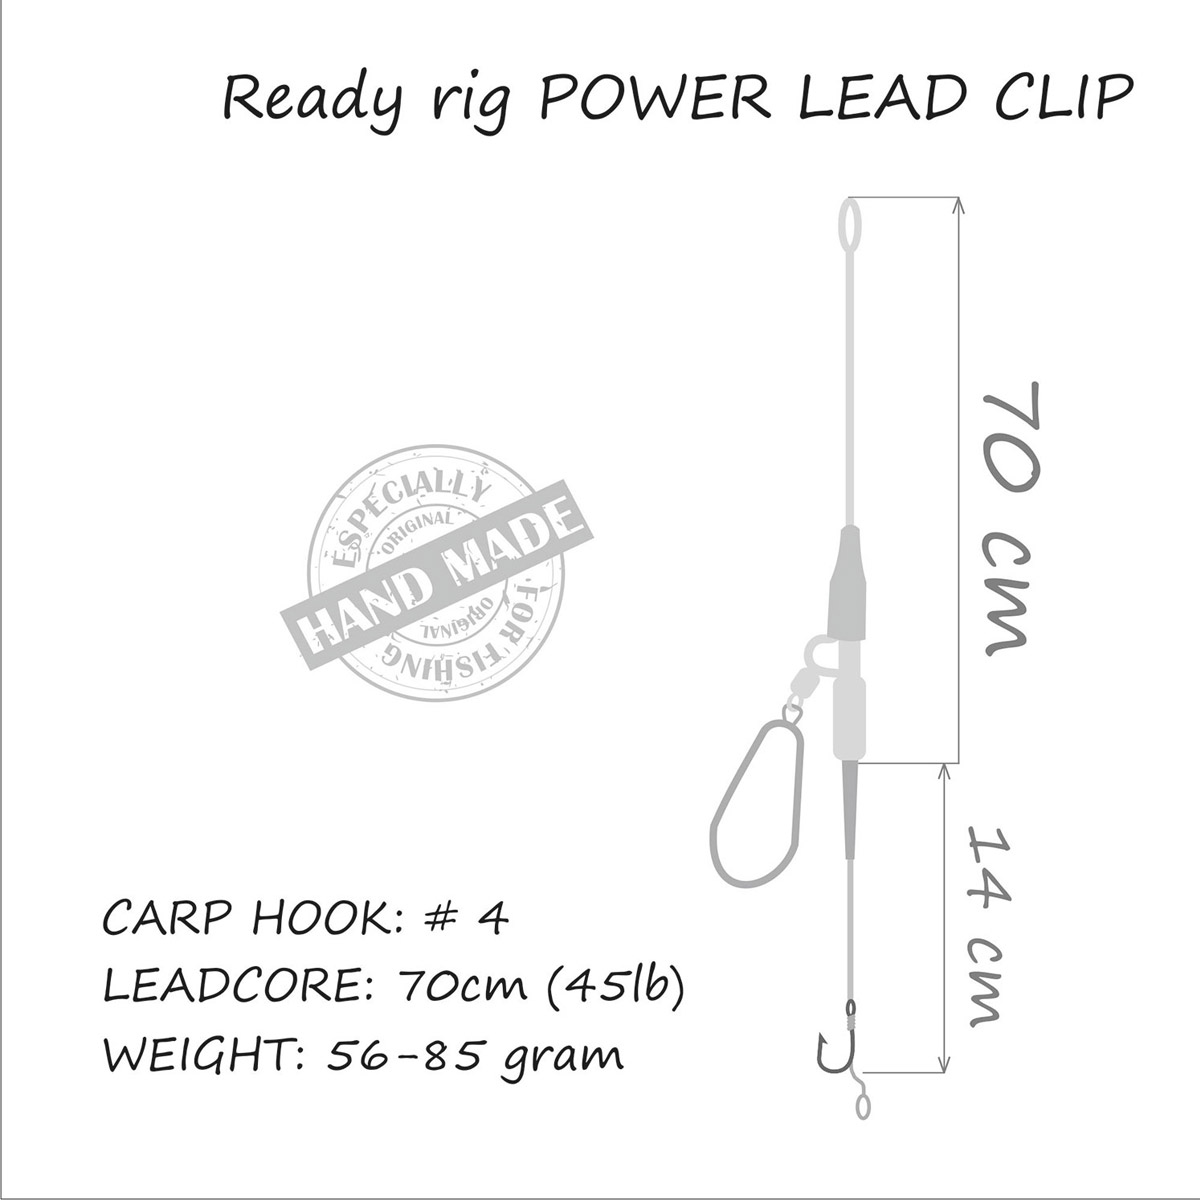 Orange Inline Carp Rig Power Leadclip